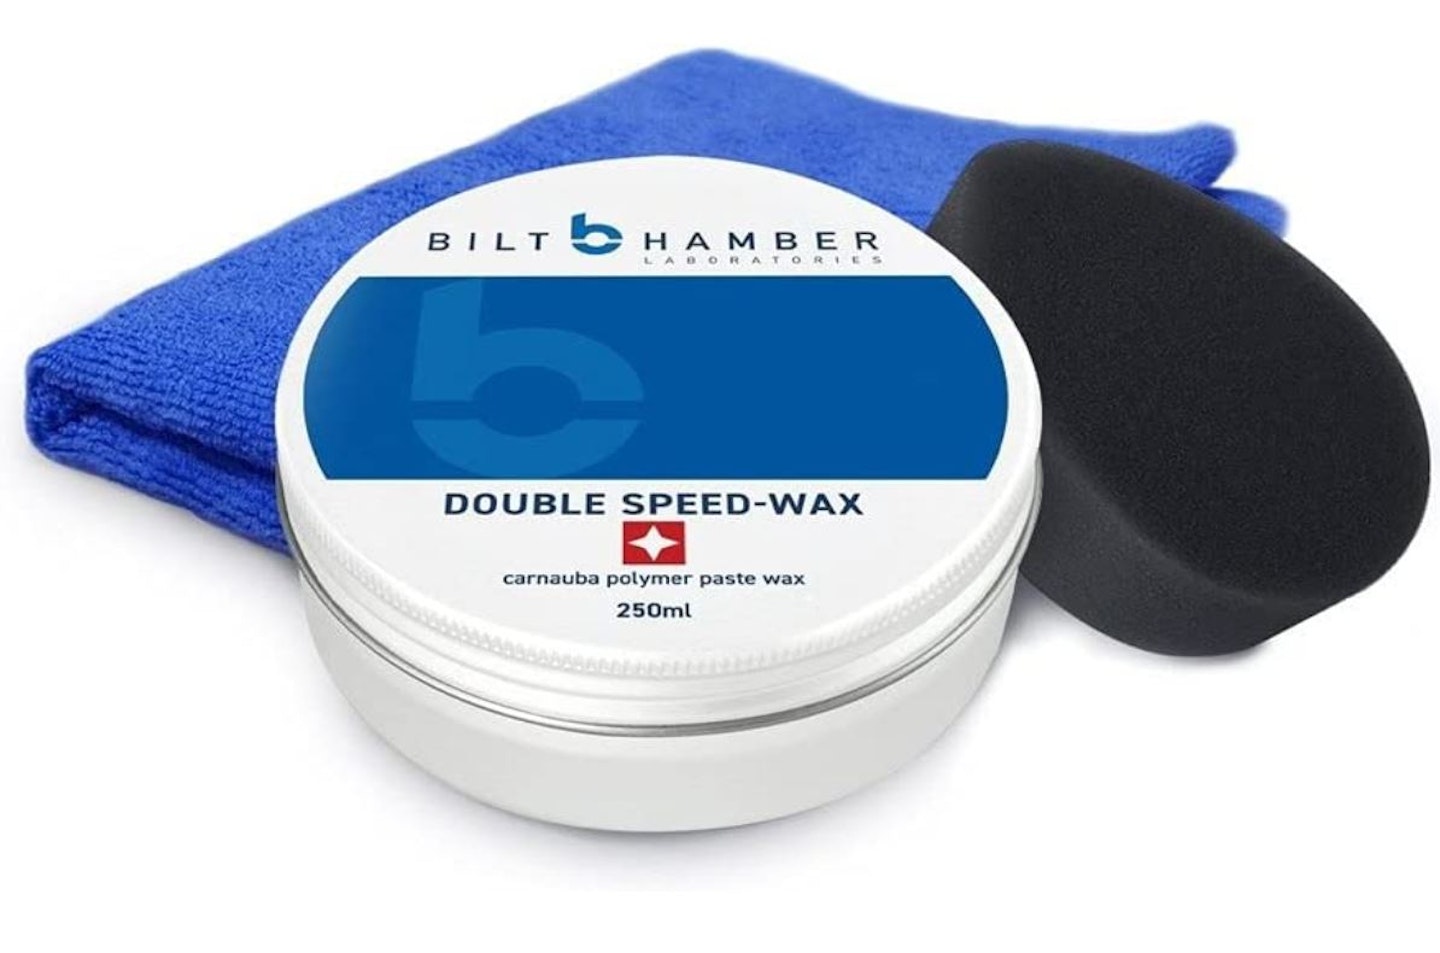 Bilt Hamber Double Speed-Wax (250ml)